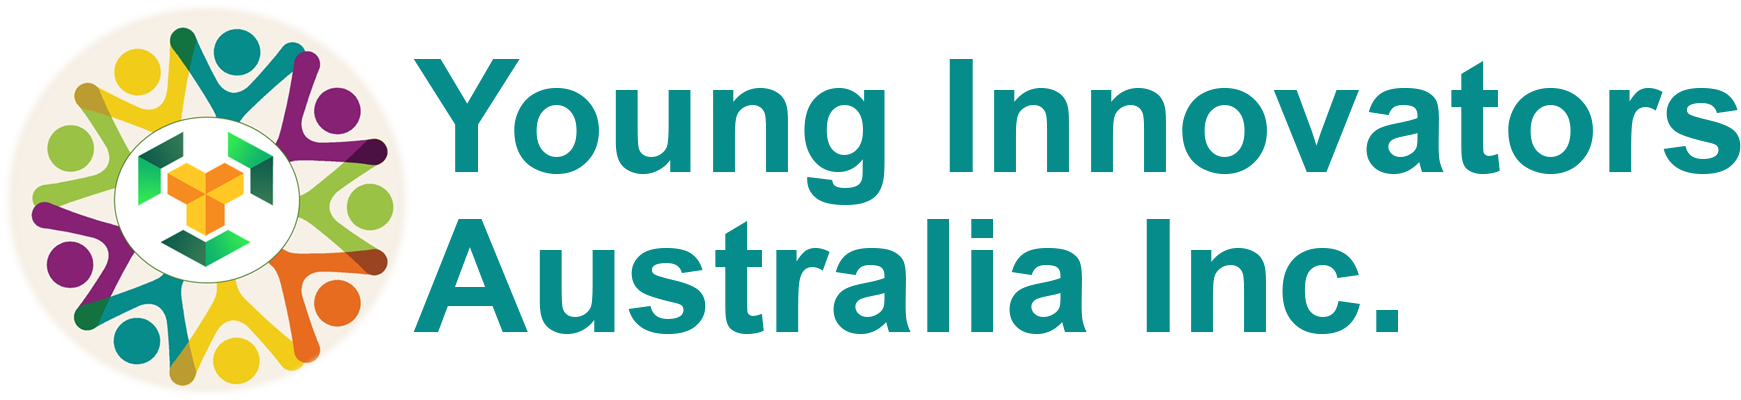 Young Innovators Australia